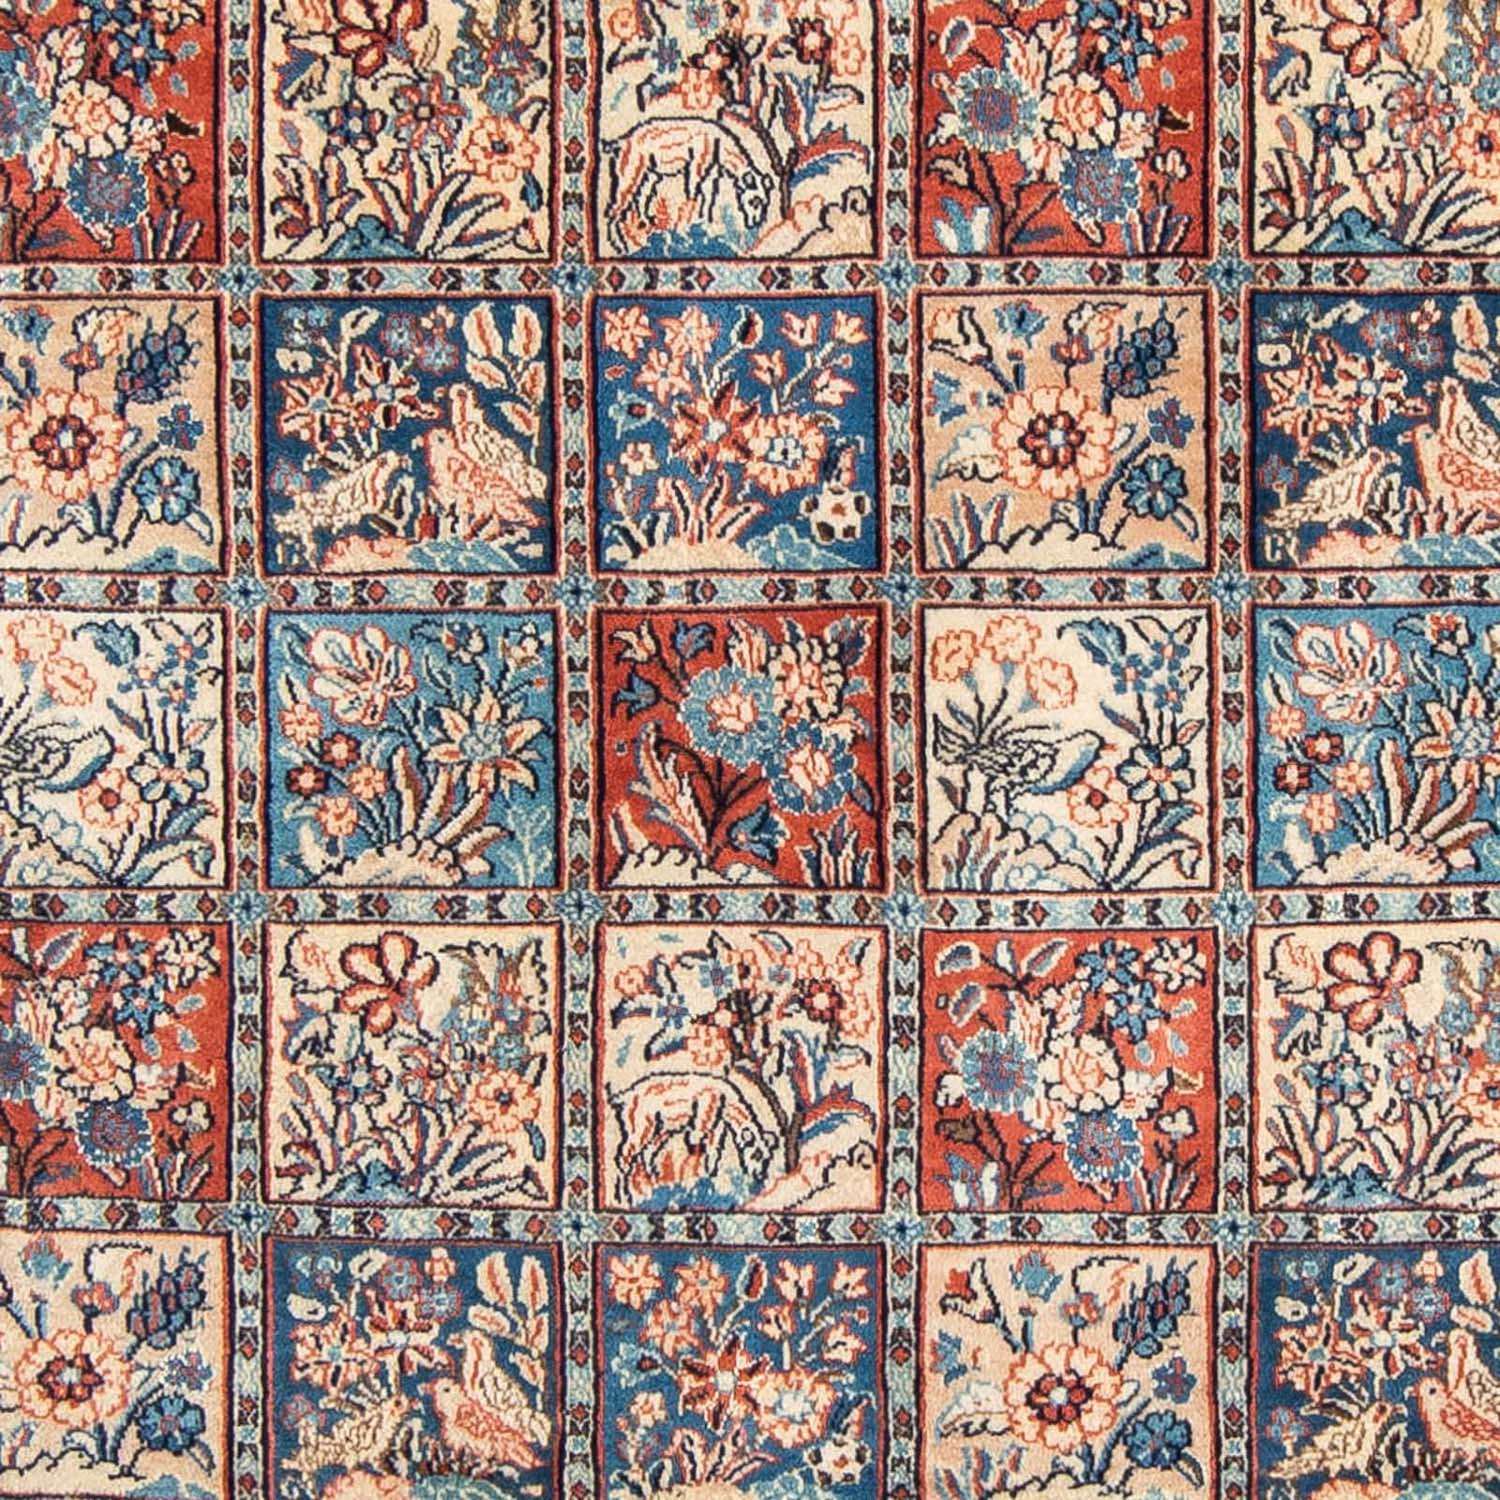 Tapis persan - Classique - 298 x 204 cm - rouge clair